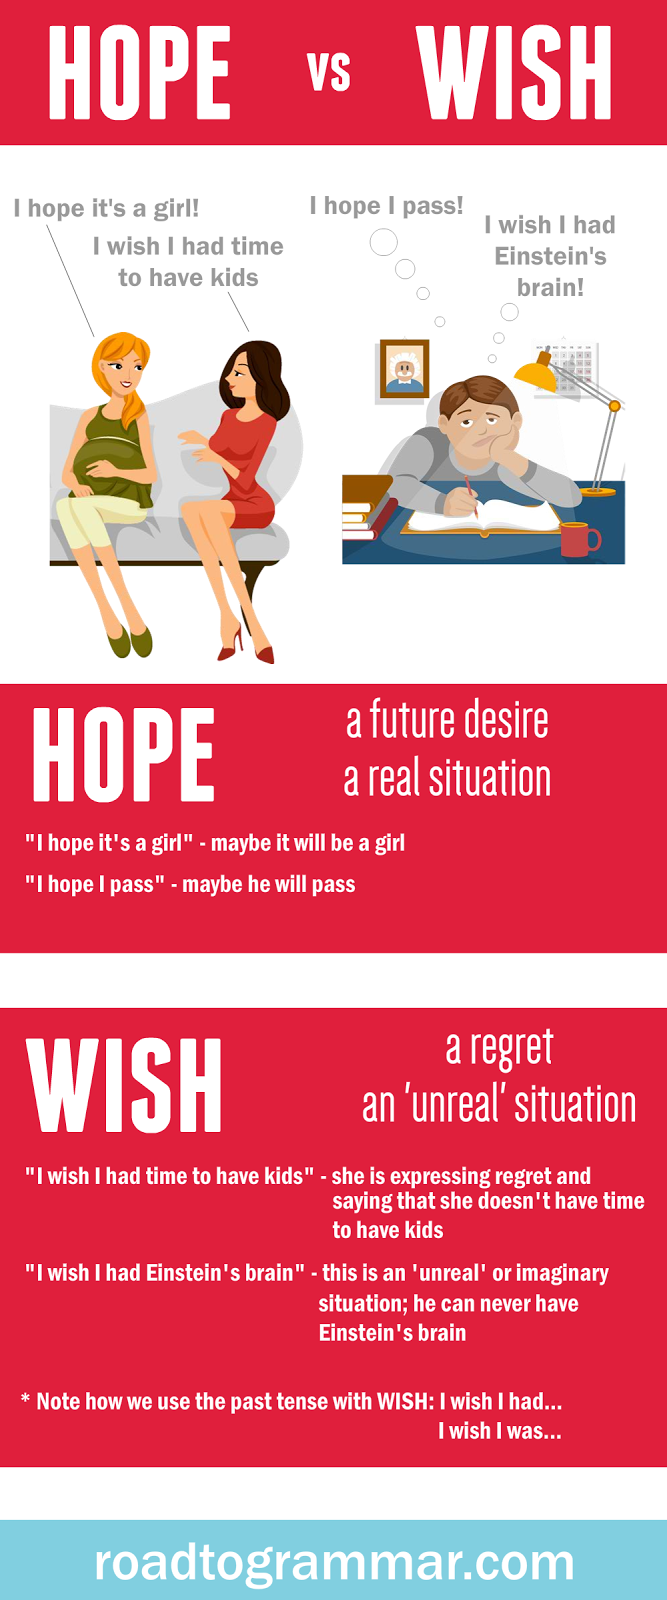 The Road to Grammar Blog: Short Visual Lesson: HOPE vs WISH